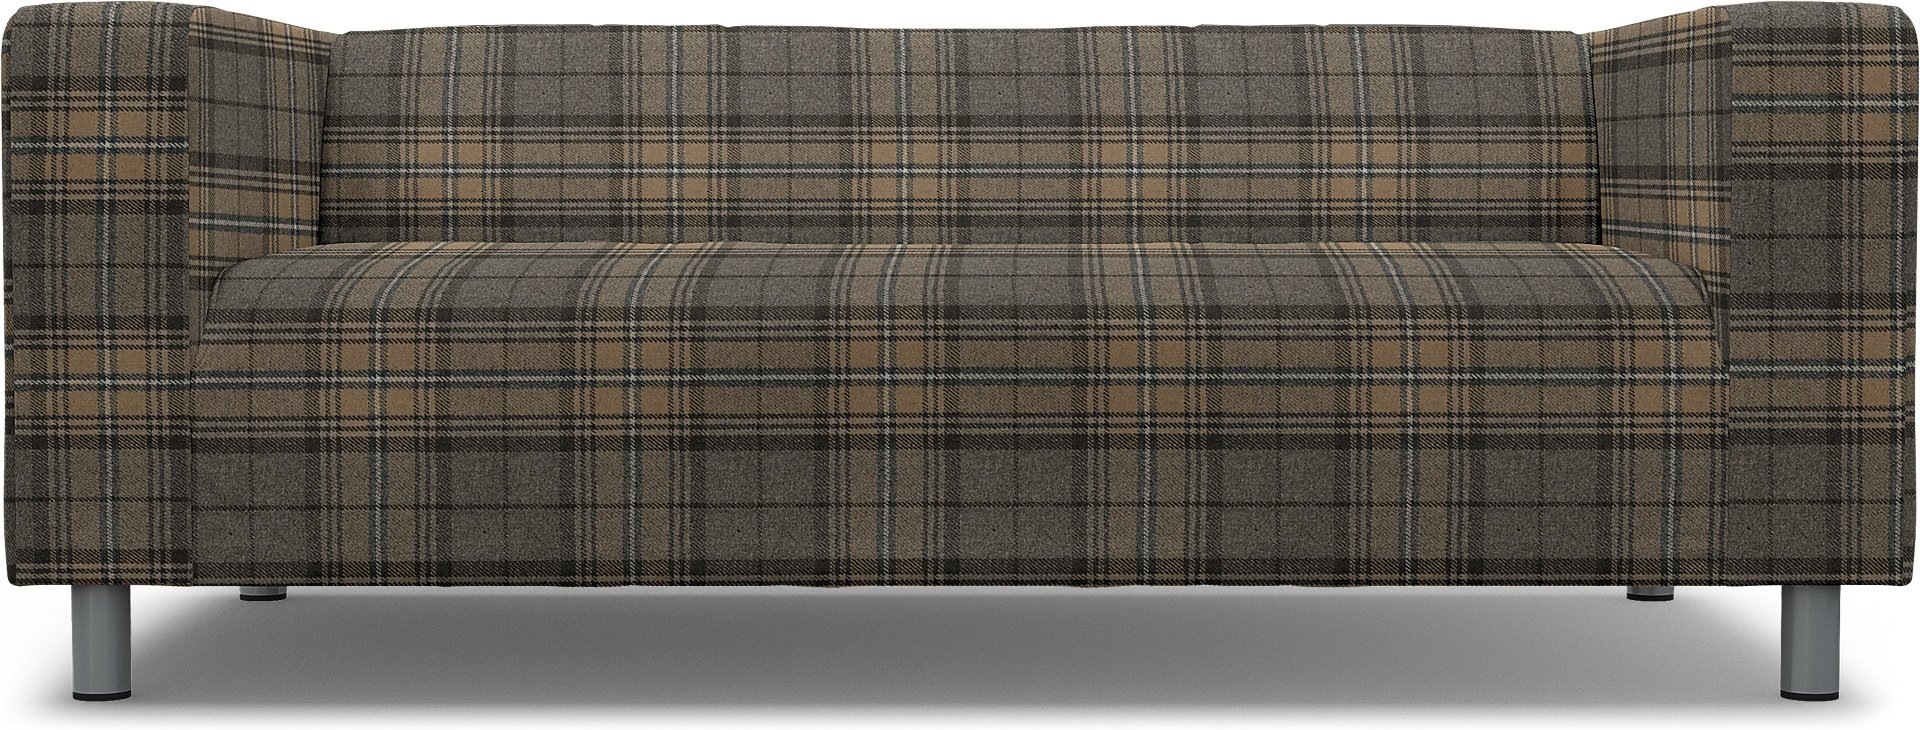 IKEA - Klippan 2 Seater Sofa Cover, Bark Brown, Wool - Bemz